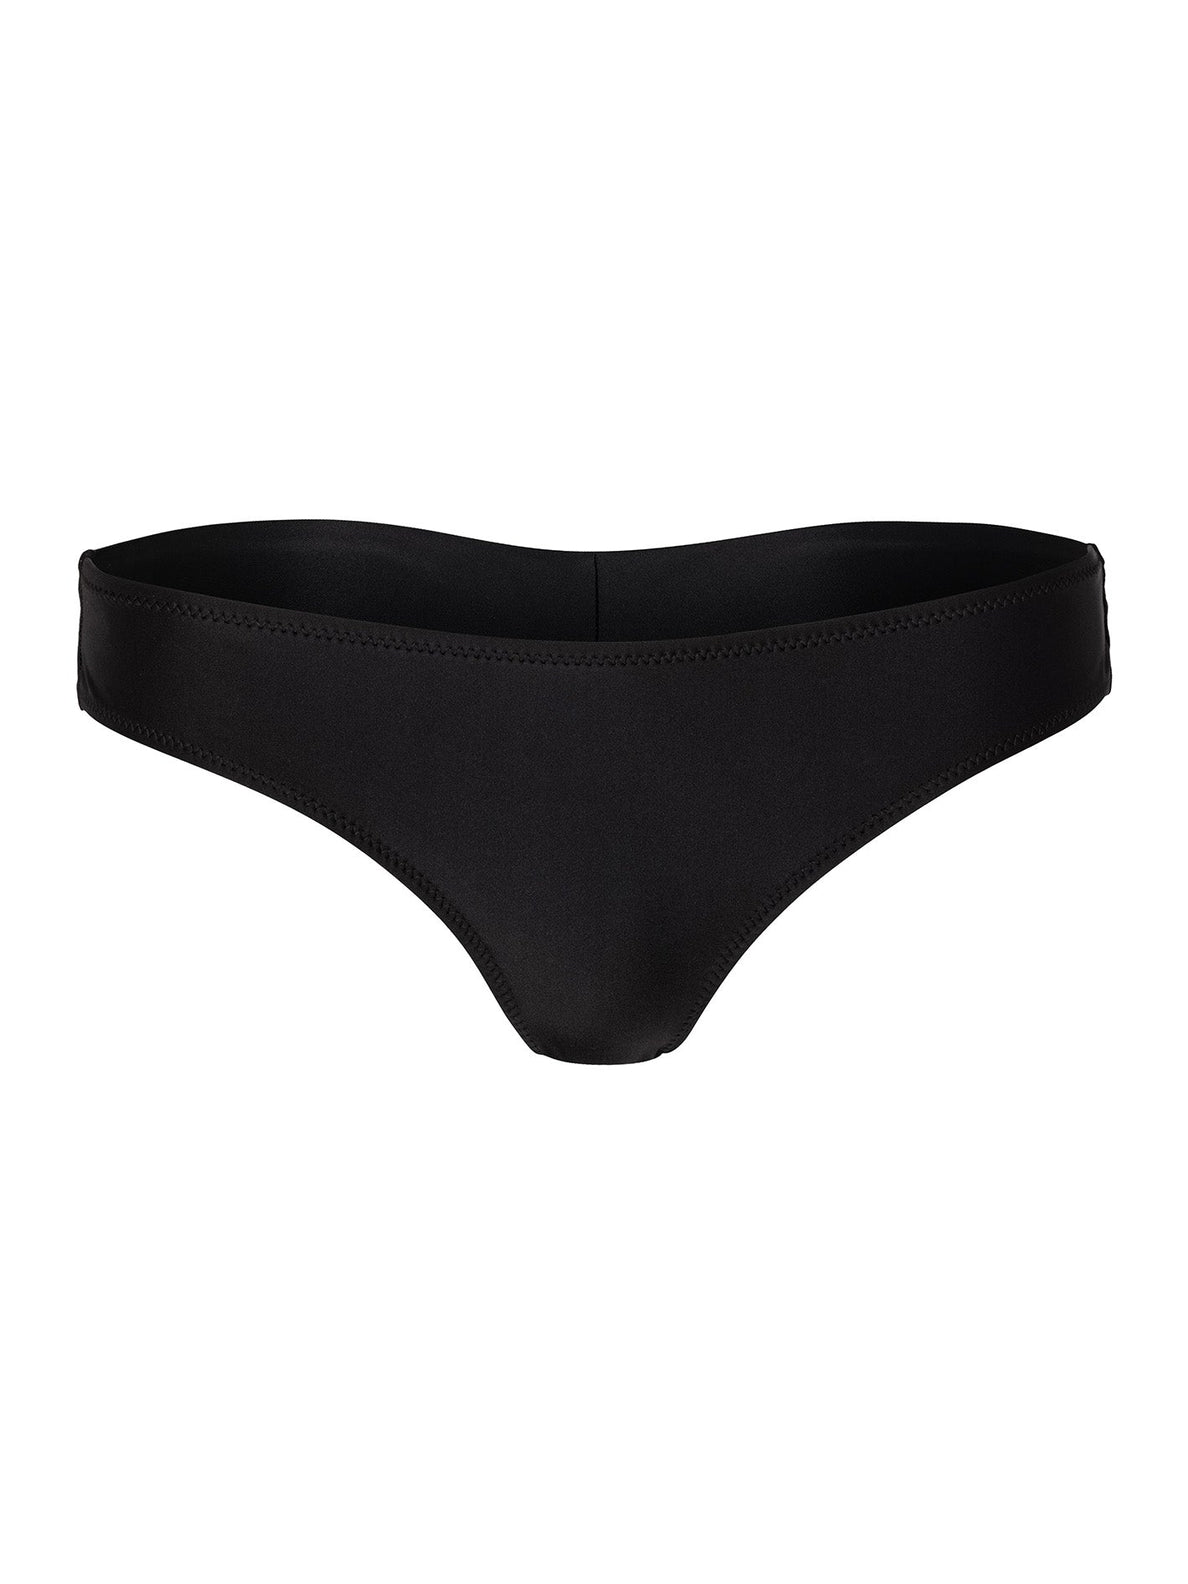 Simply Solid Cheekini Bikini Bottom - Black (O2112104_BLK) [20]